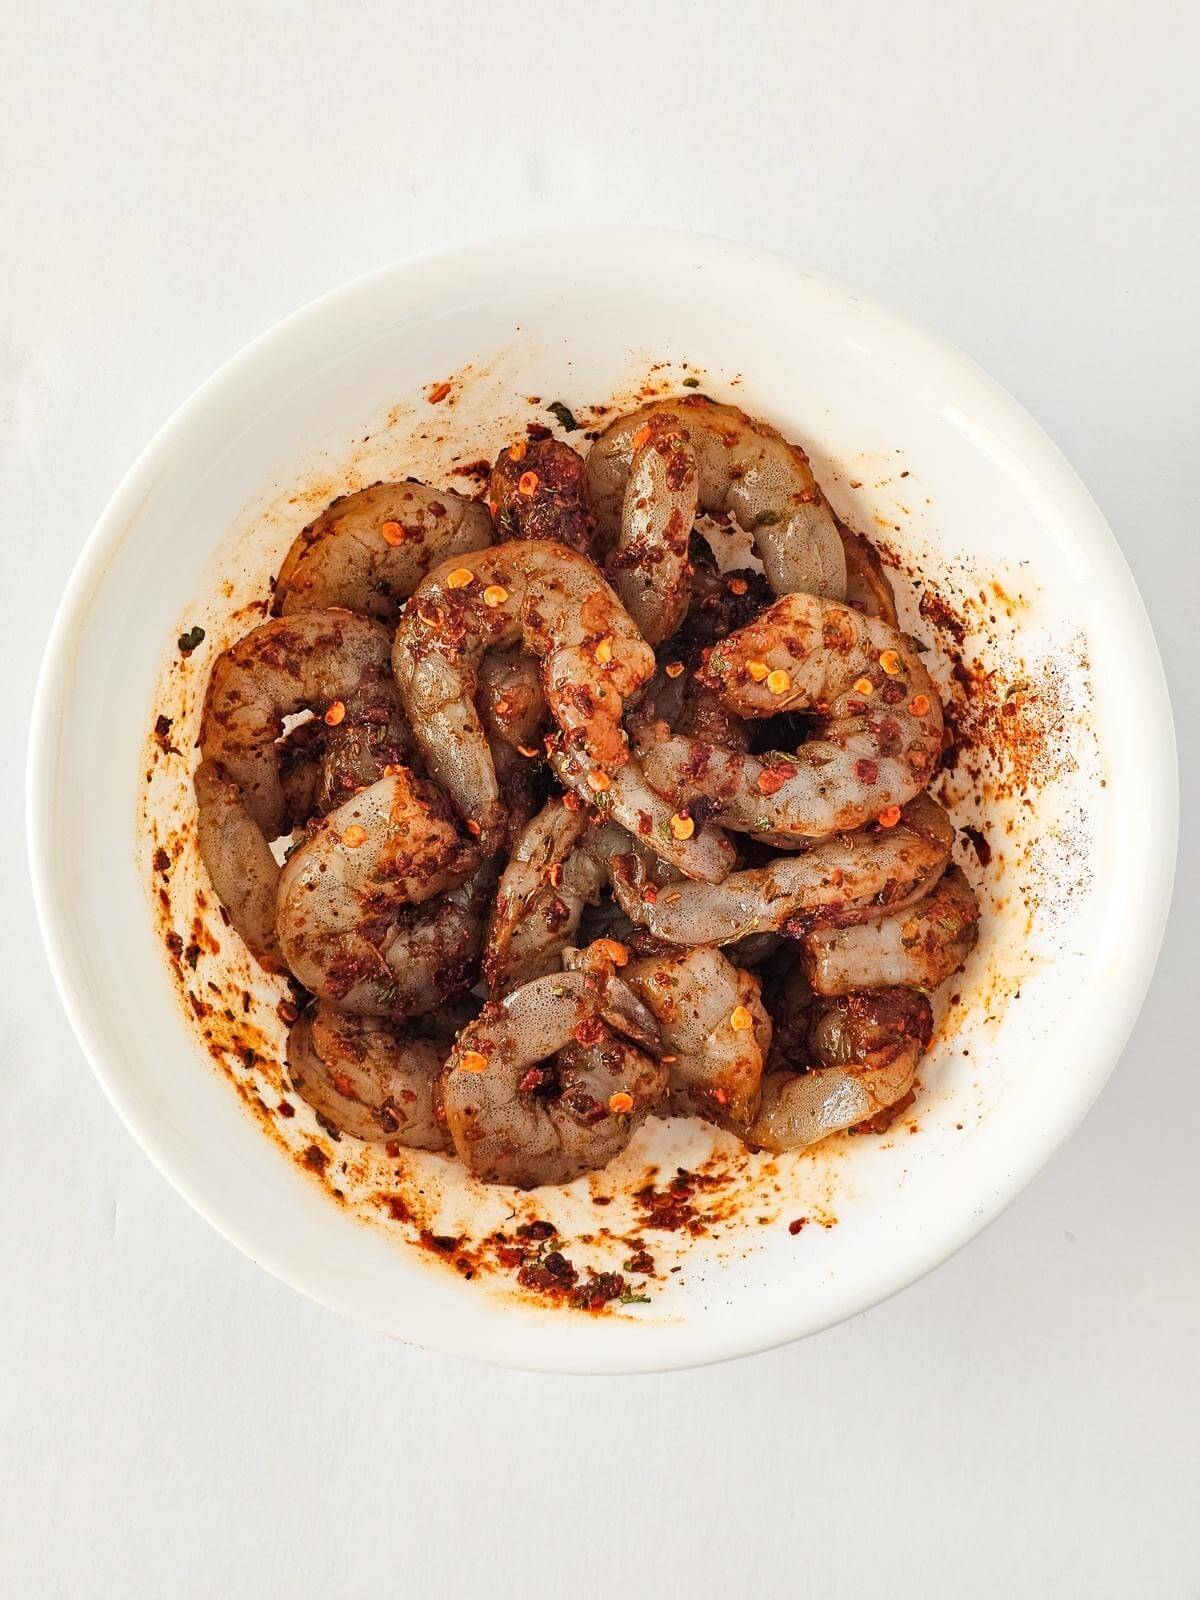 Raw seasoned shrimp in a bowl.